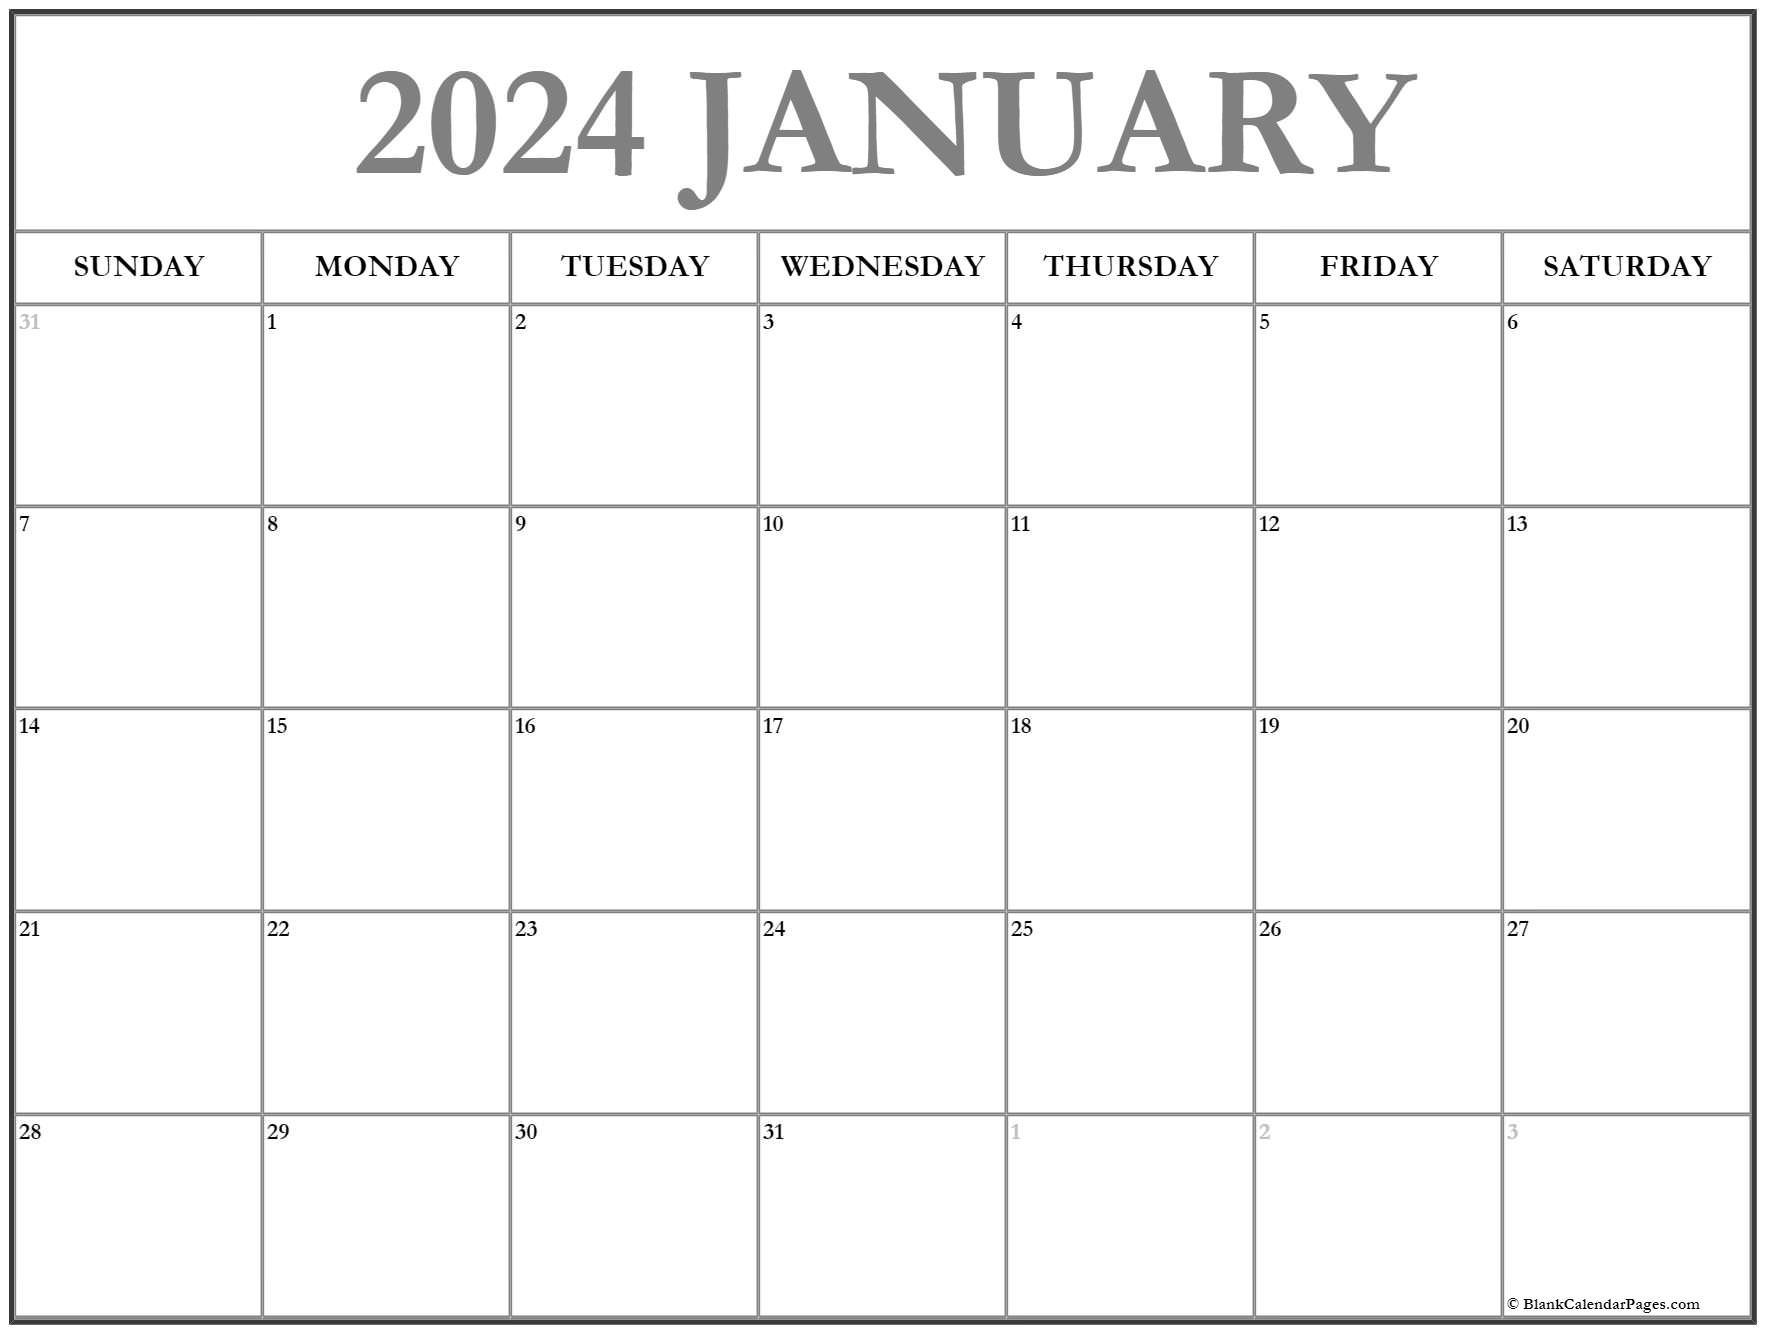 January 2024 Table Calendar New The Best List of January 2024